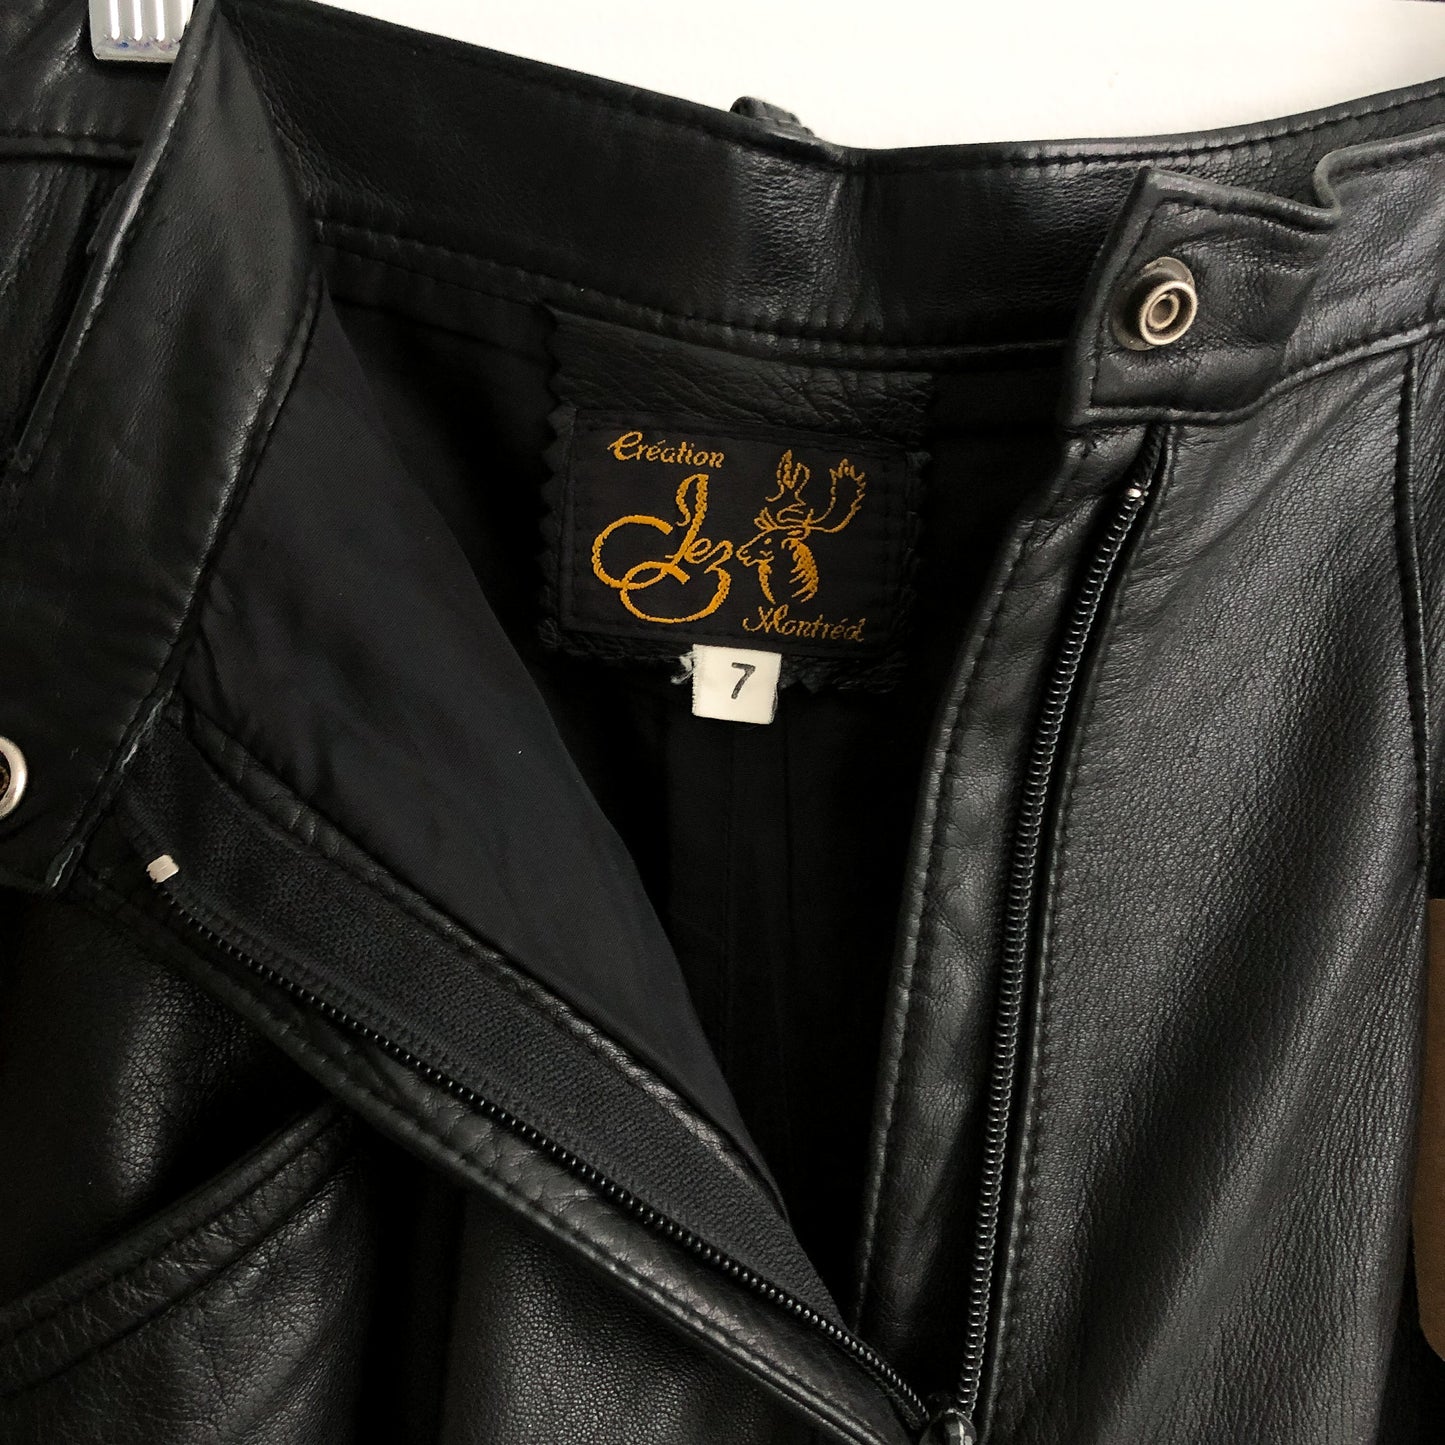 Vintage Montreal Leather Pants